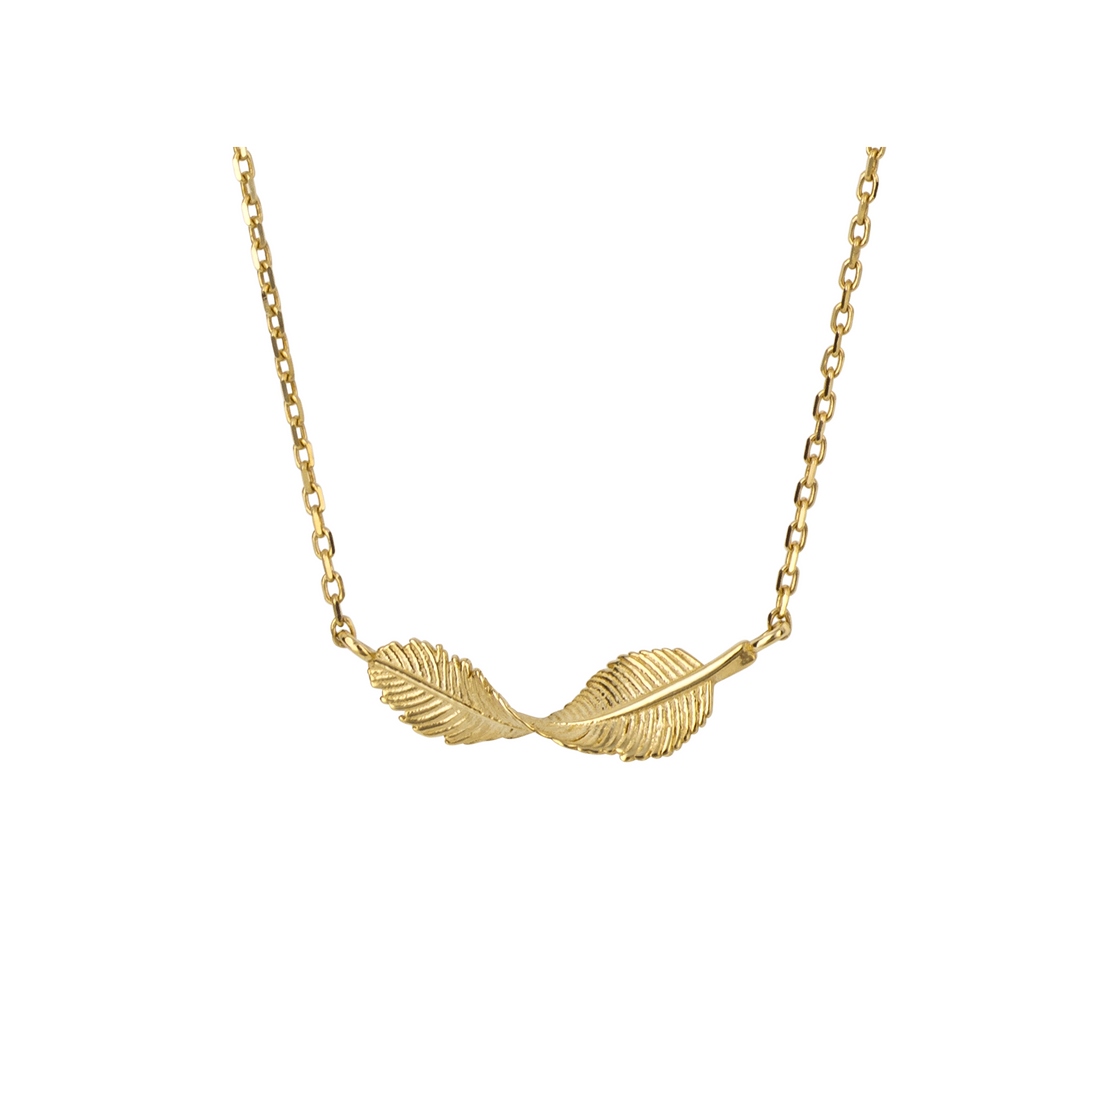 Twist Leaf Necklace in 9ct Yellow Gold - Robert Anthony Jewellers, Edinburgh